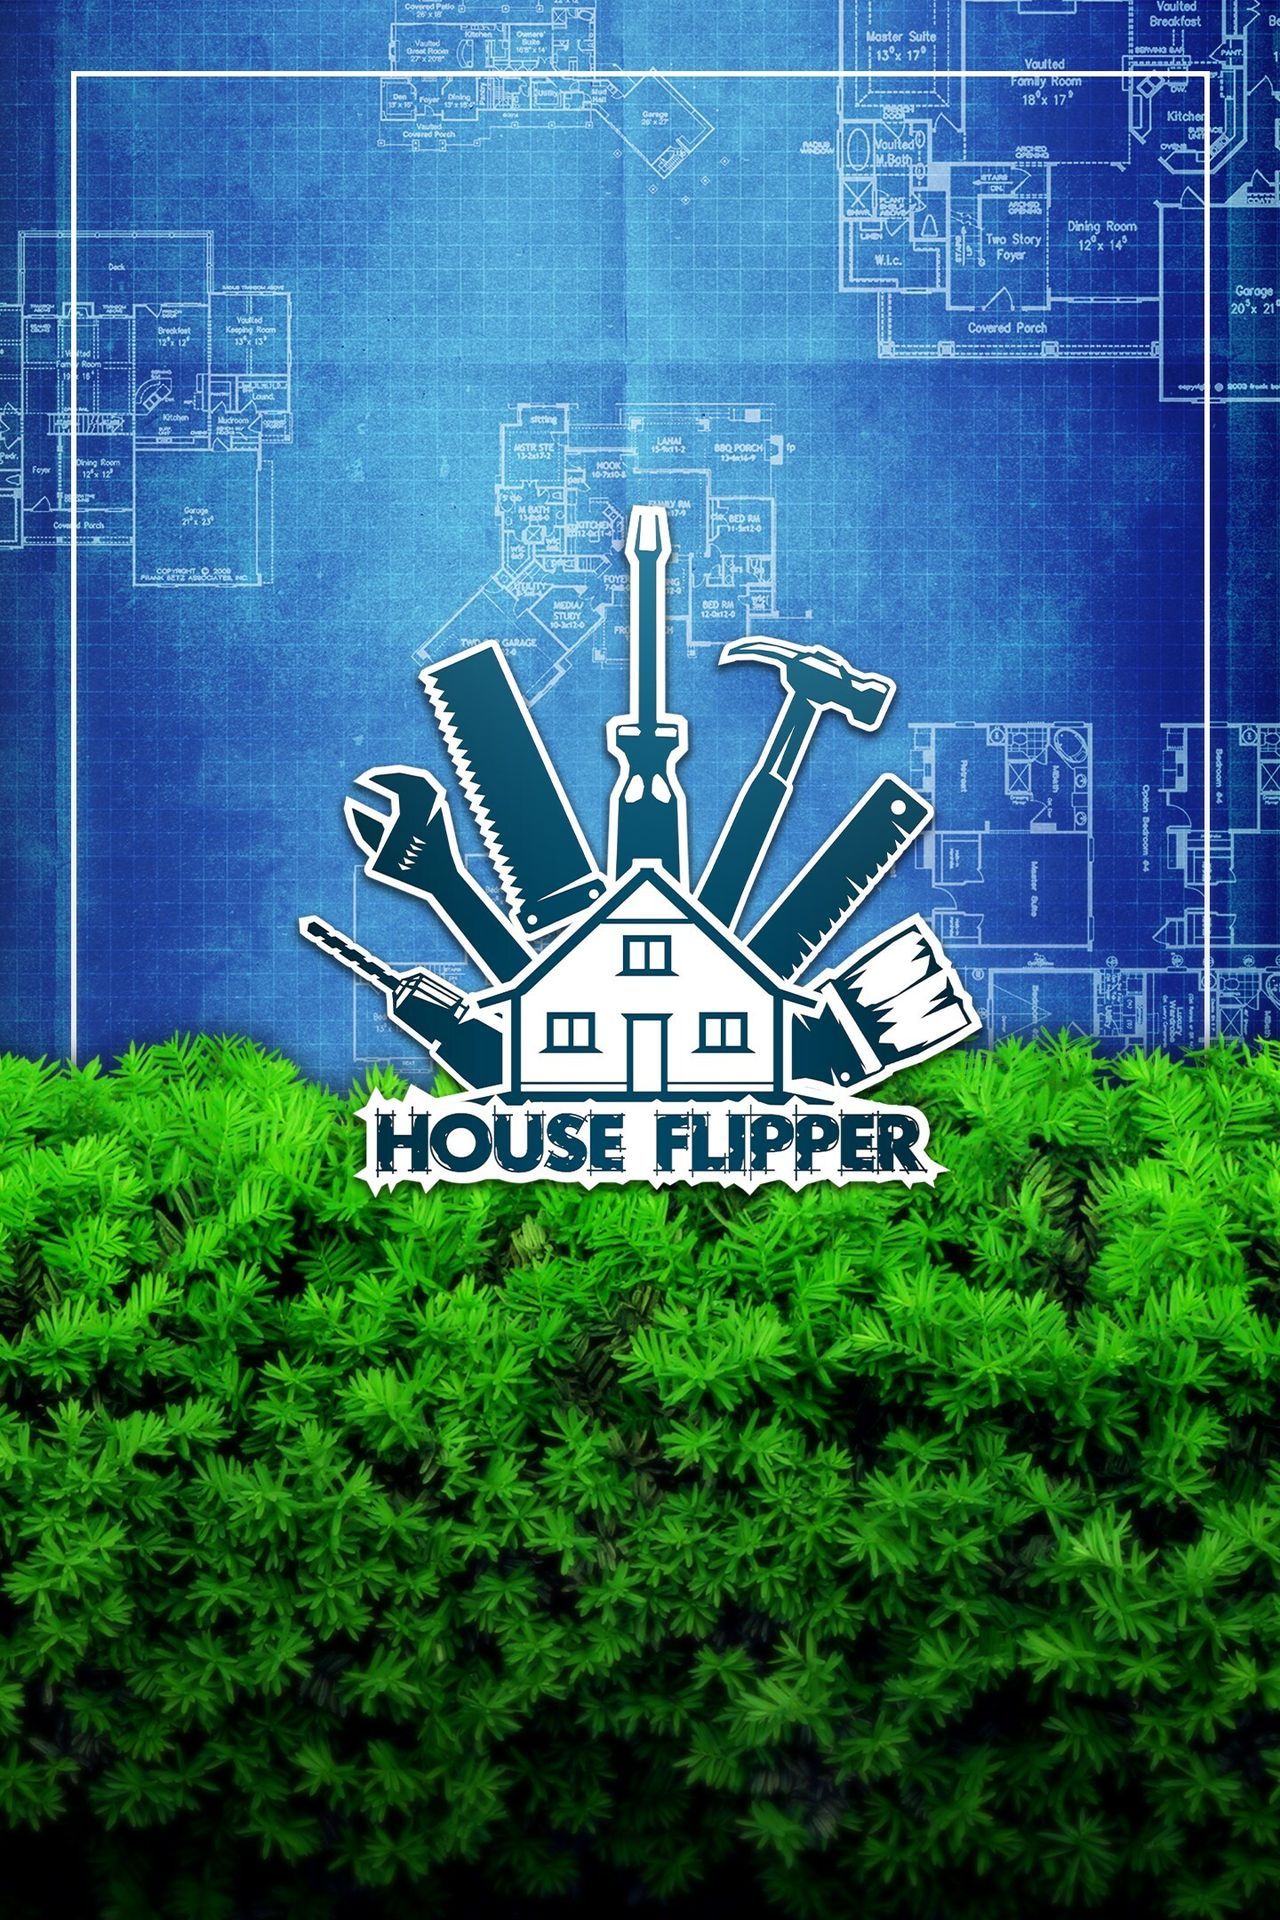 house flipper xbox